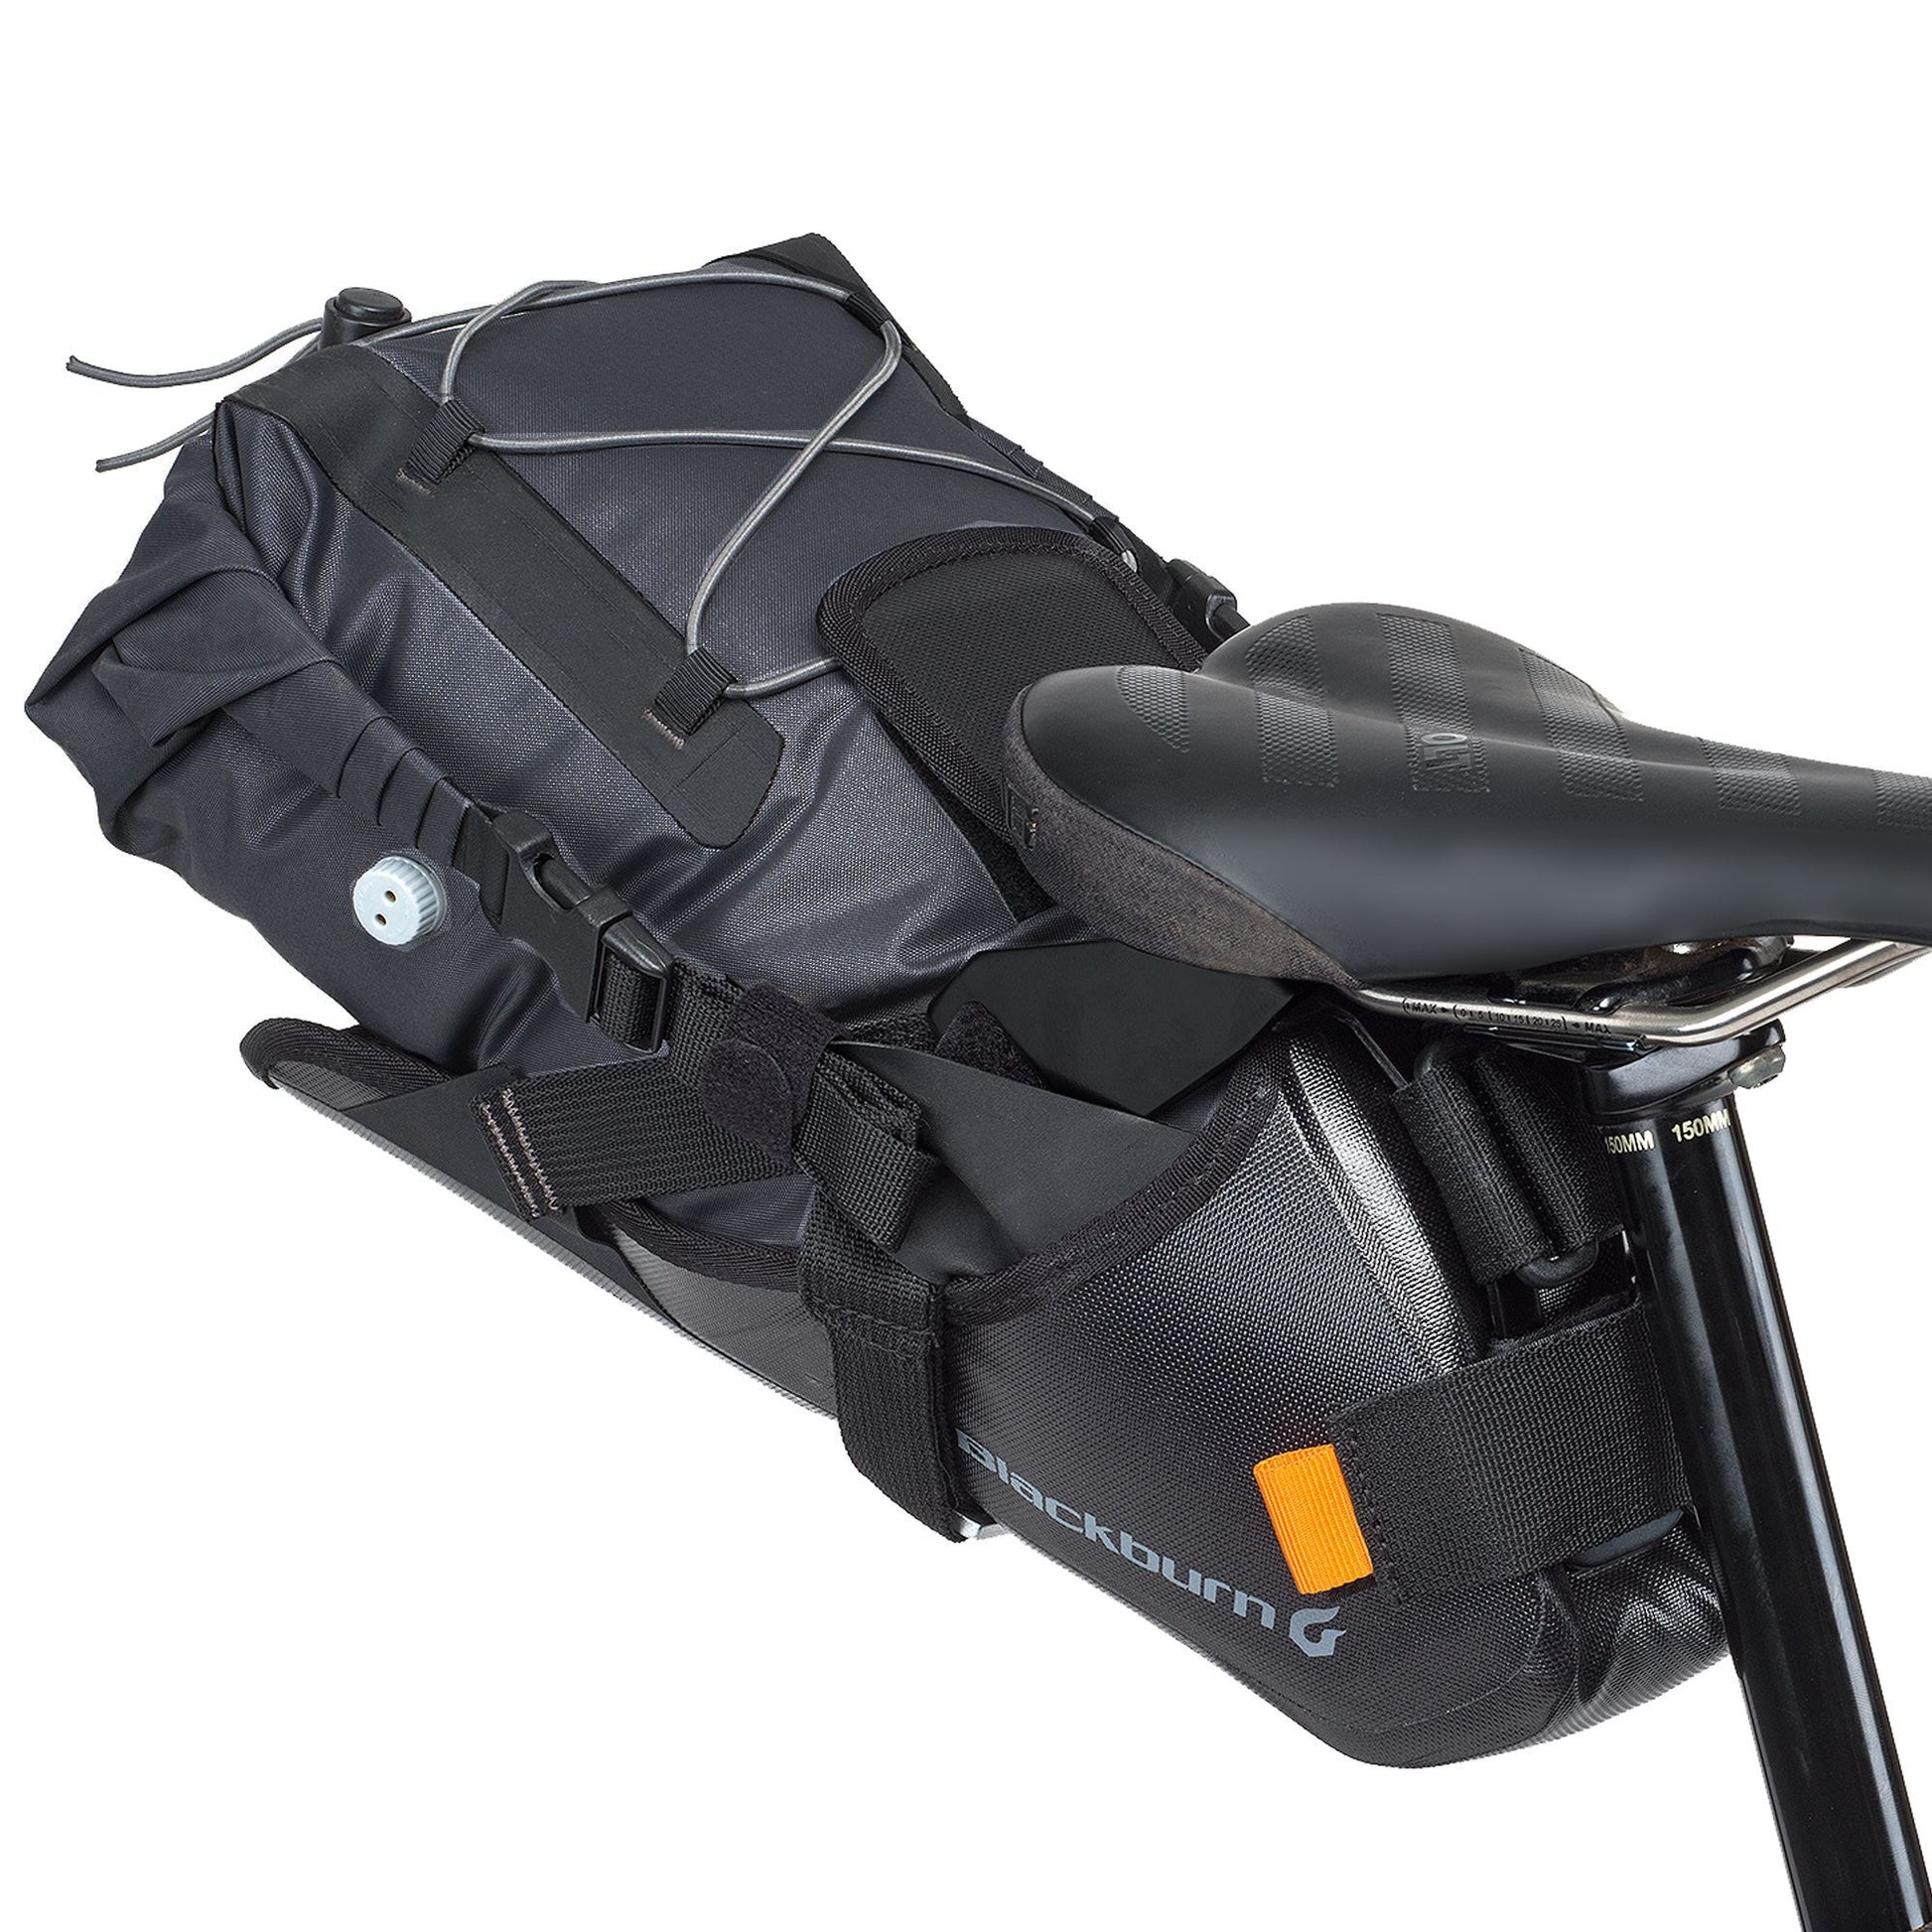 Blackburn Outpost Elite Universal Seat Pack and Dry Bag Black/Grey OS Panniers & Racks